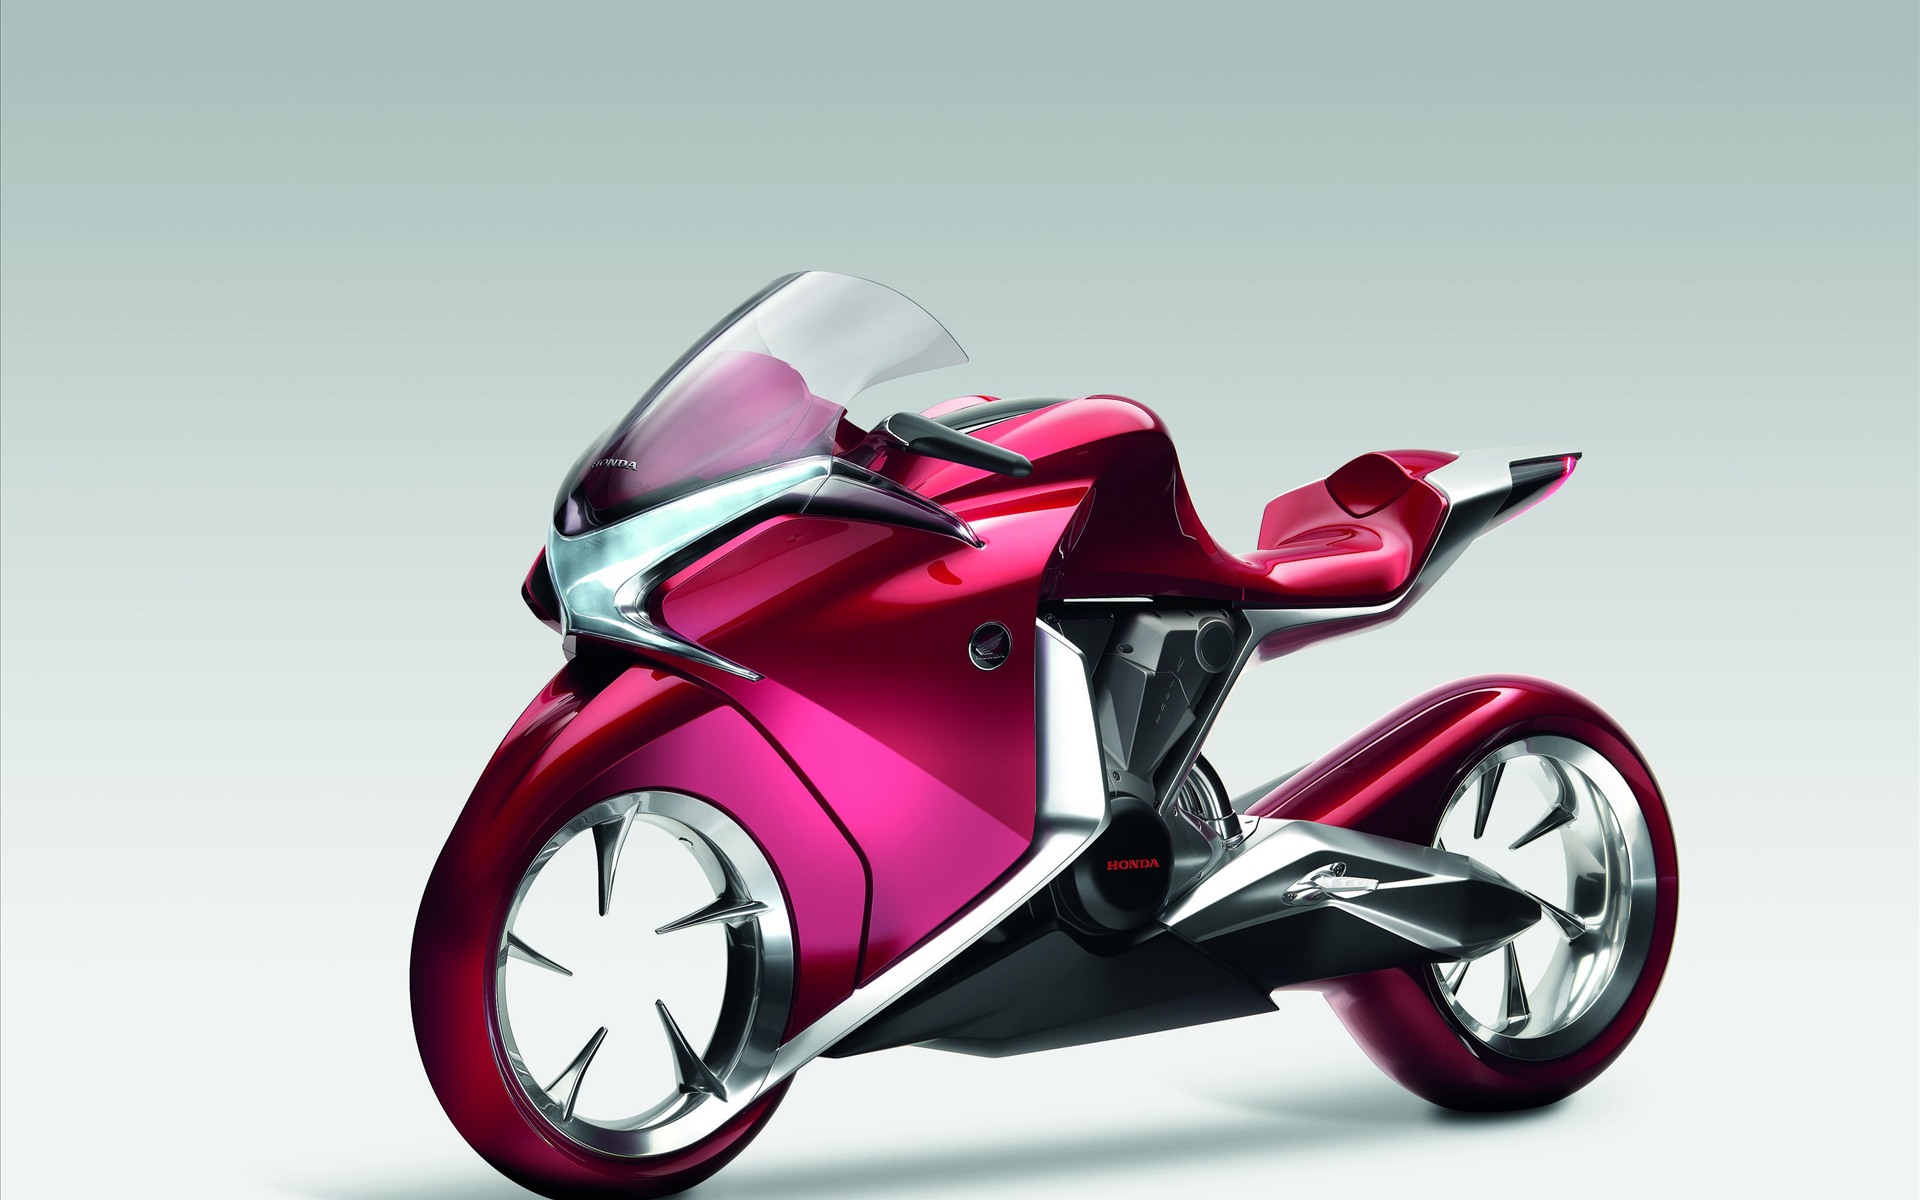 Honda V4 Concept Widescreen Bike Wallpapers HD Wallpapers